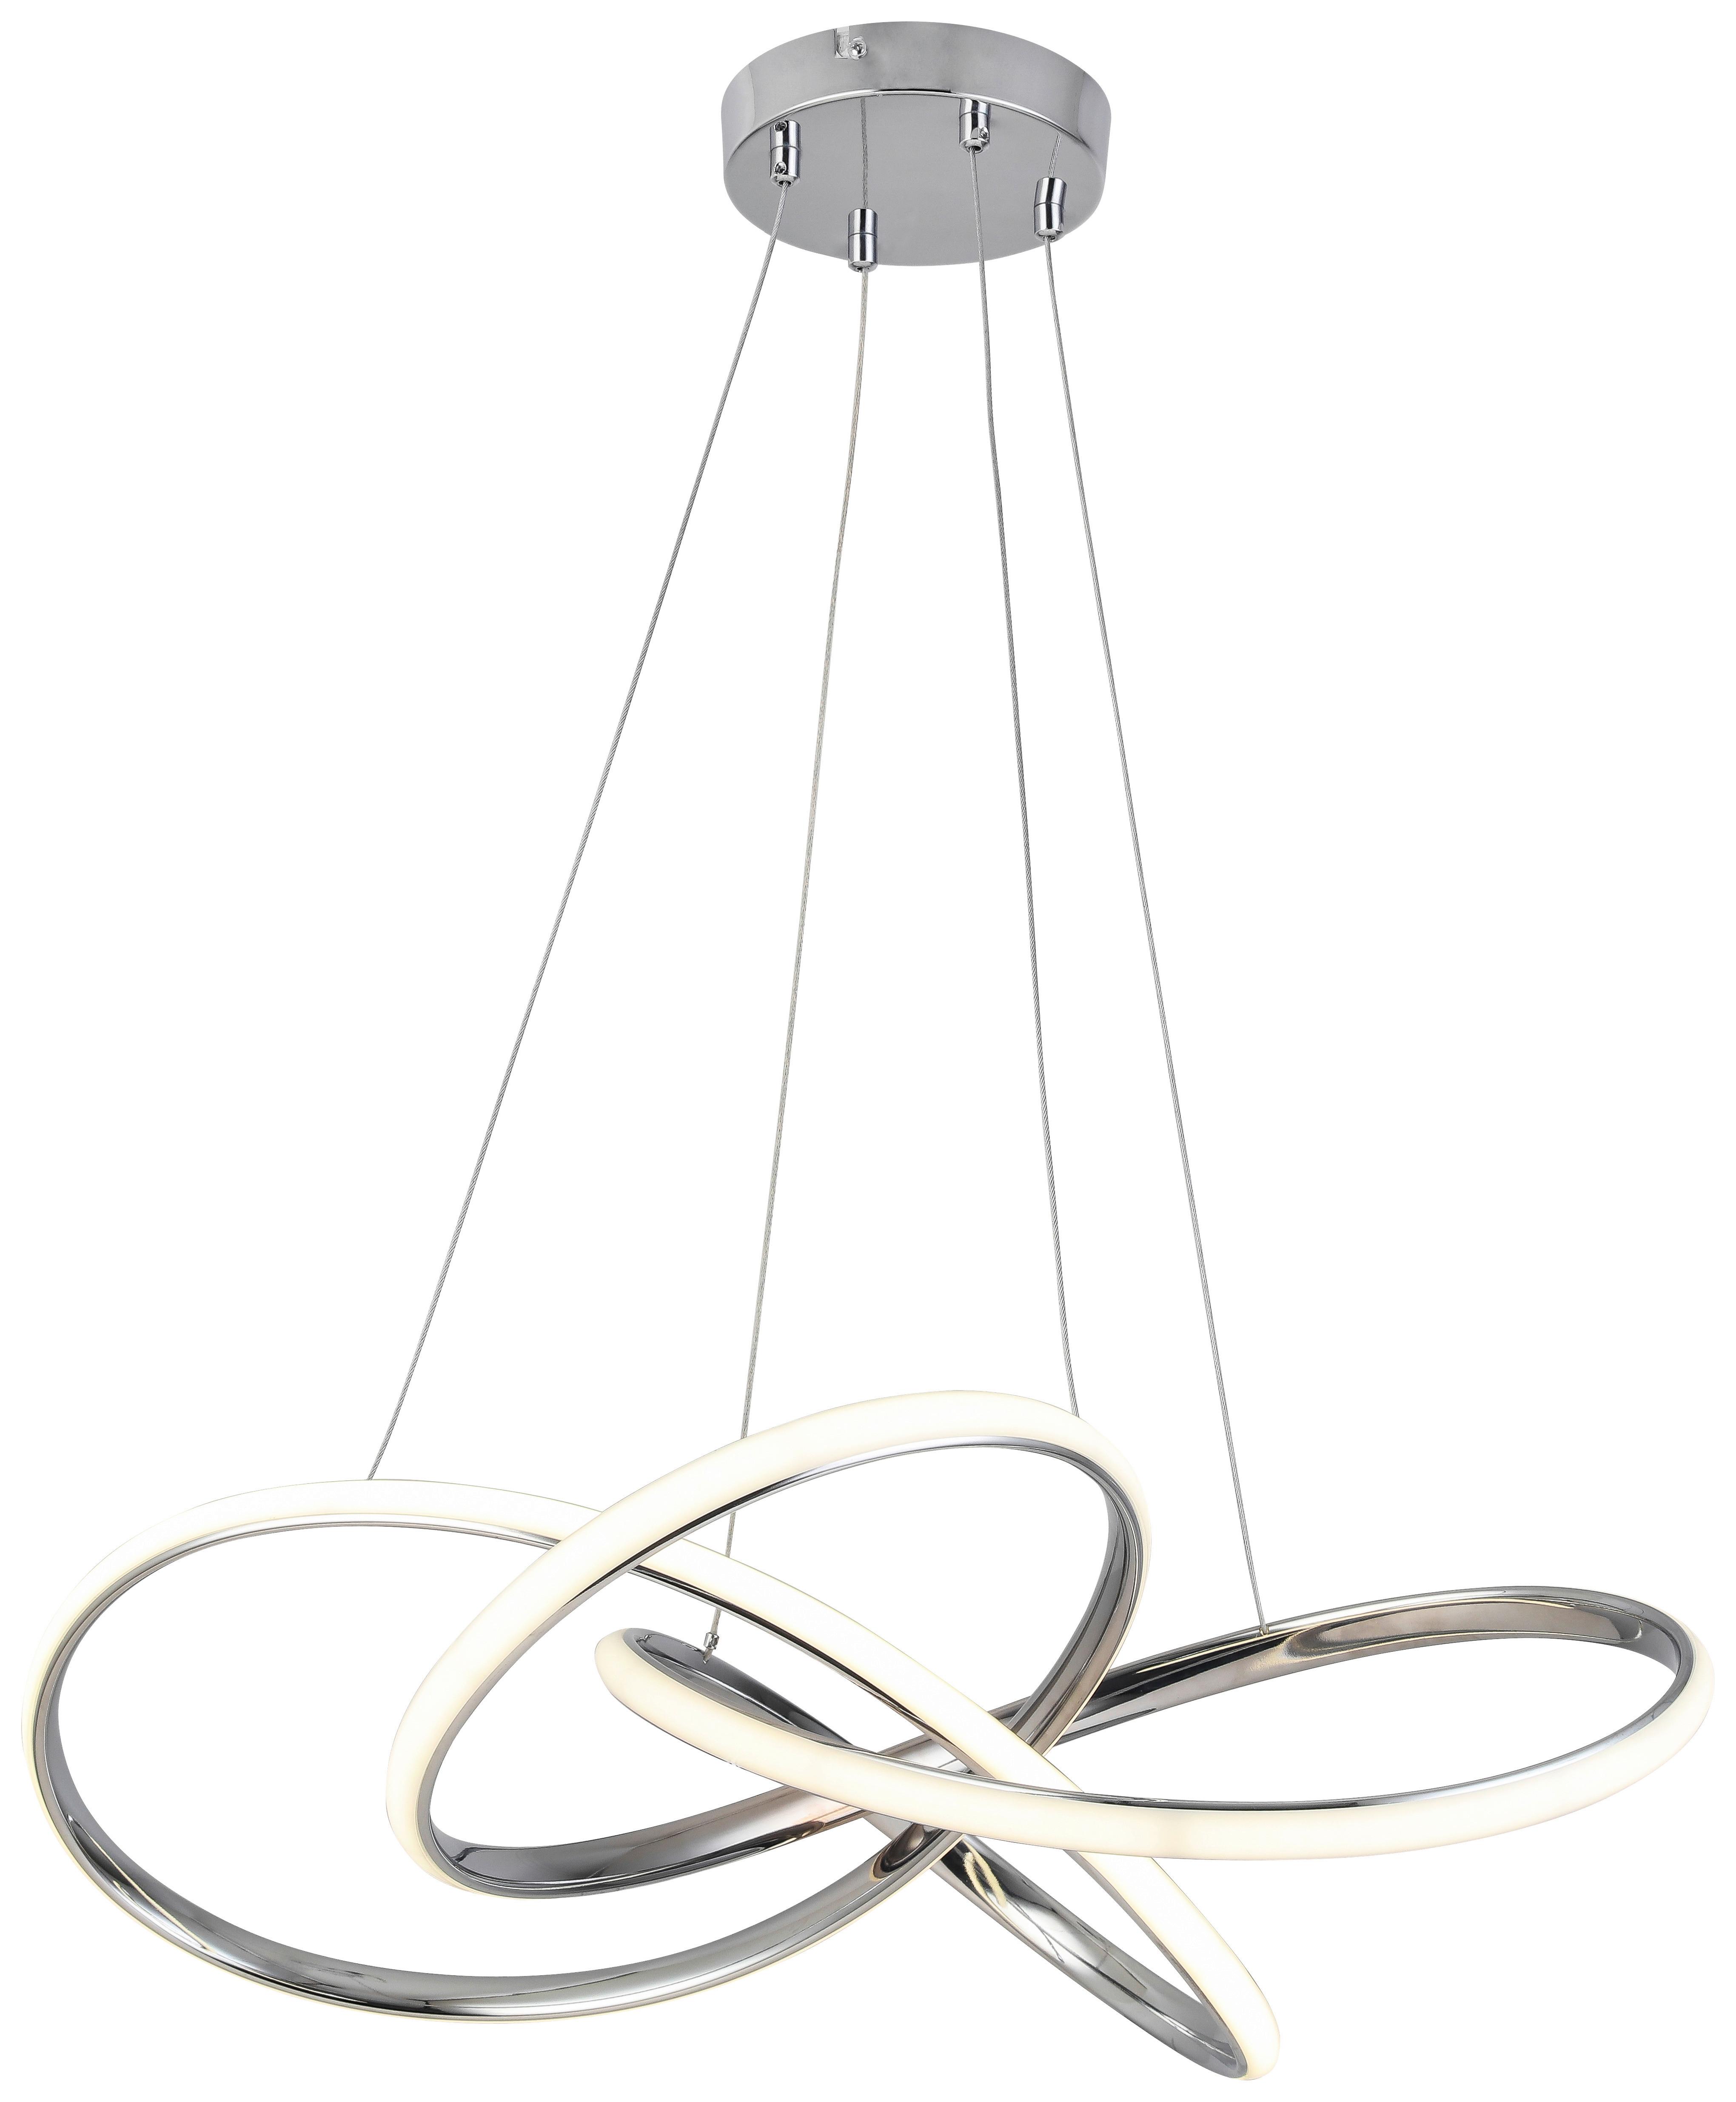 LAMPA WISZĄCA LED LENORE - chromowy, Modern, tworzywo sztuczne/metal (60/120cm) - Premium Living